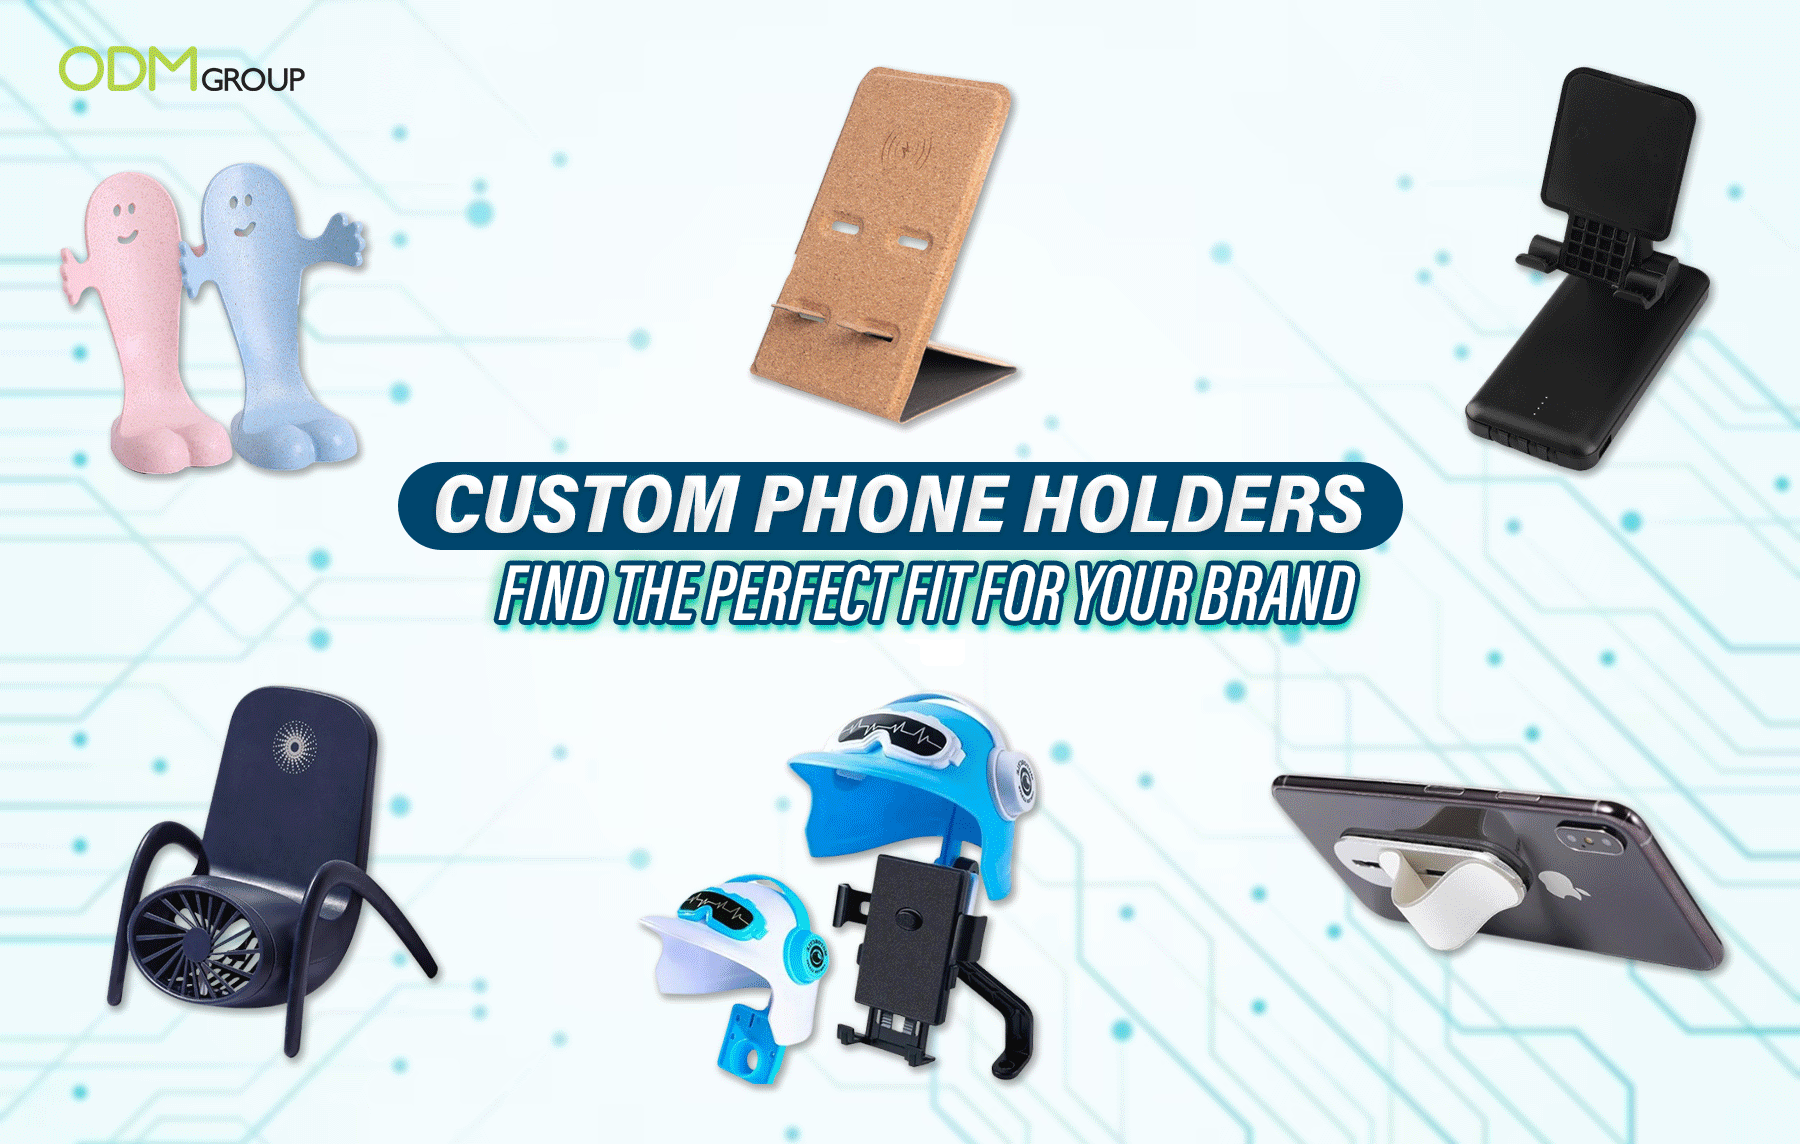 Variety of custom phone holders by ODM Group.